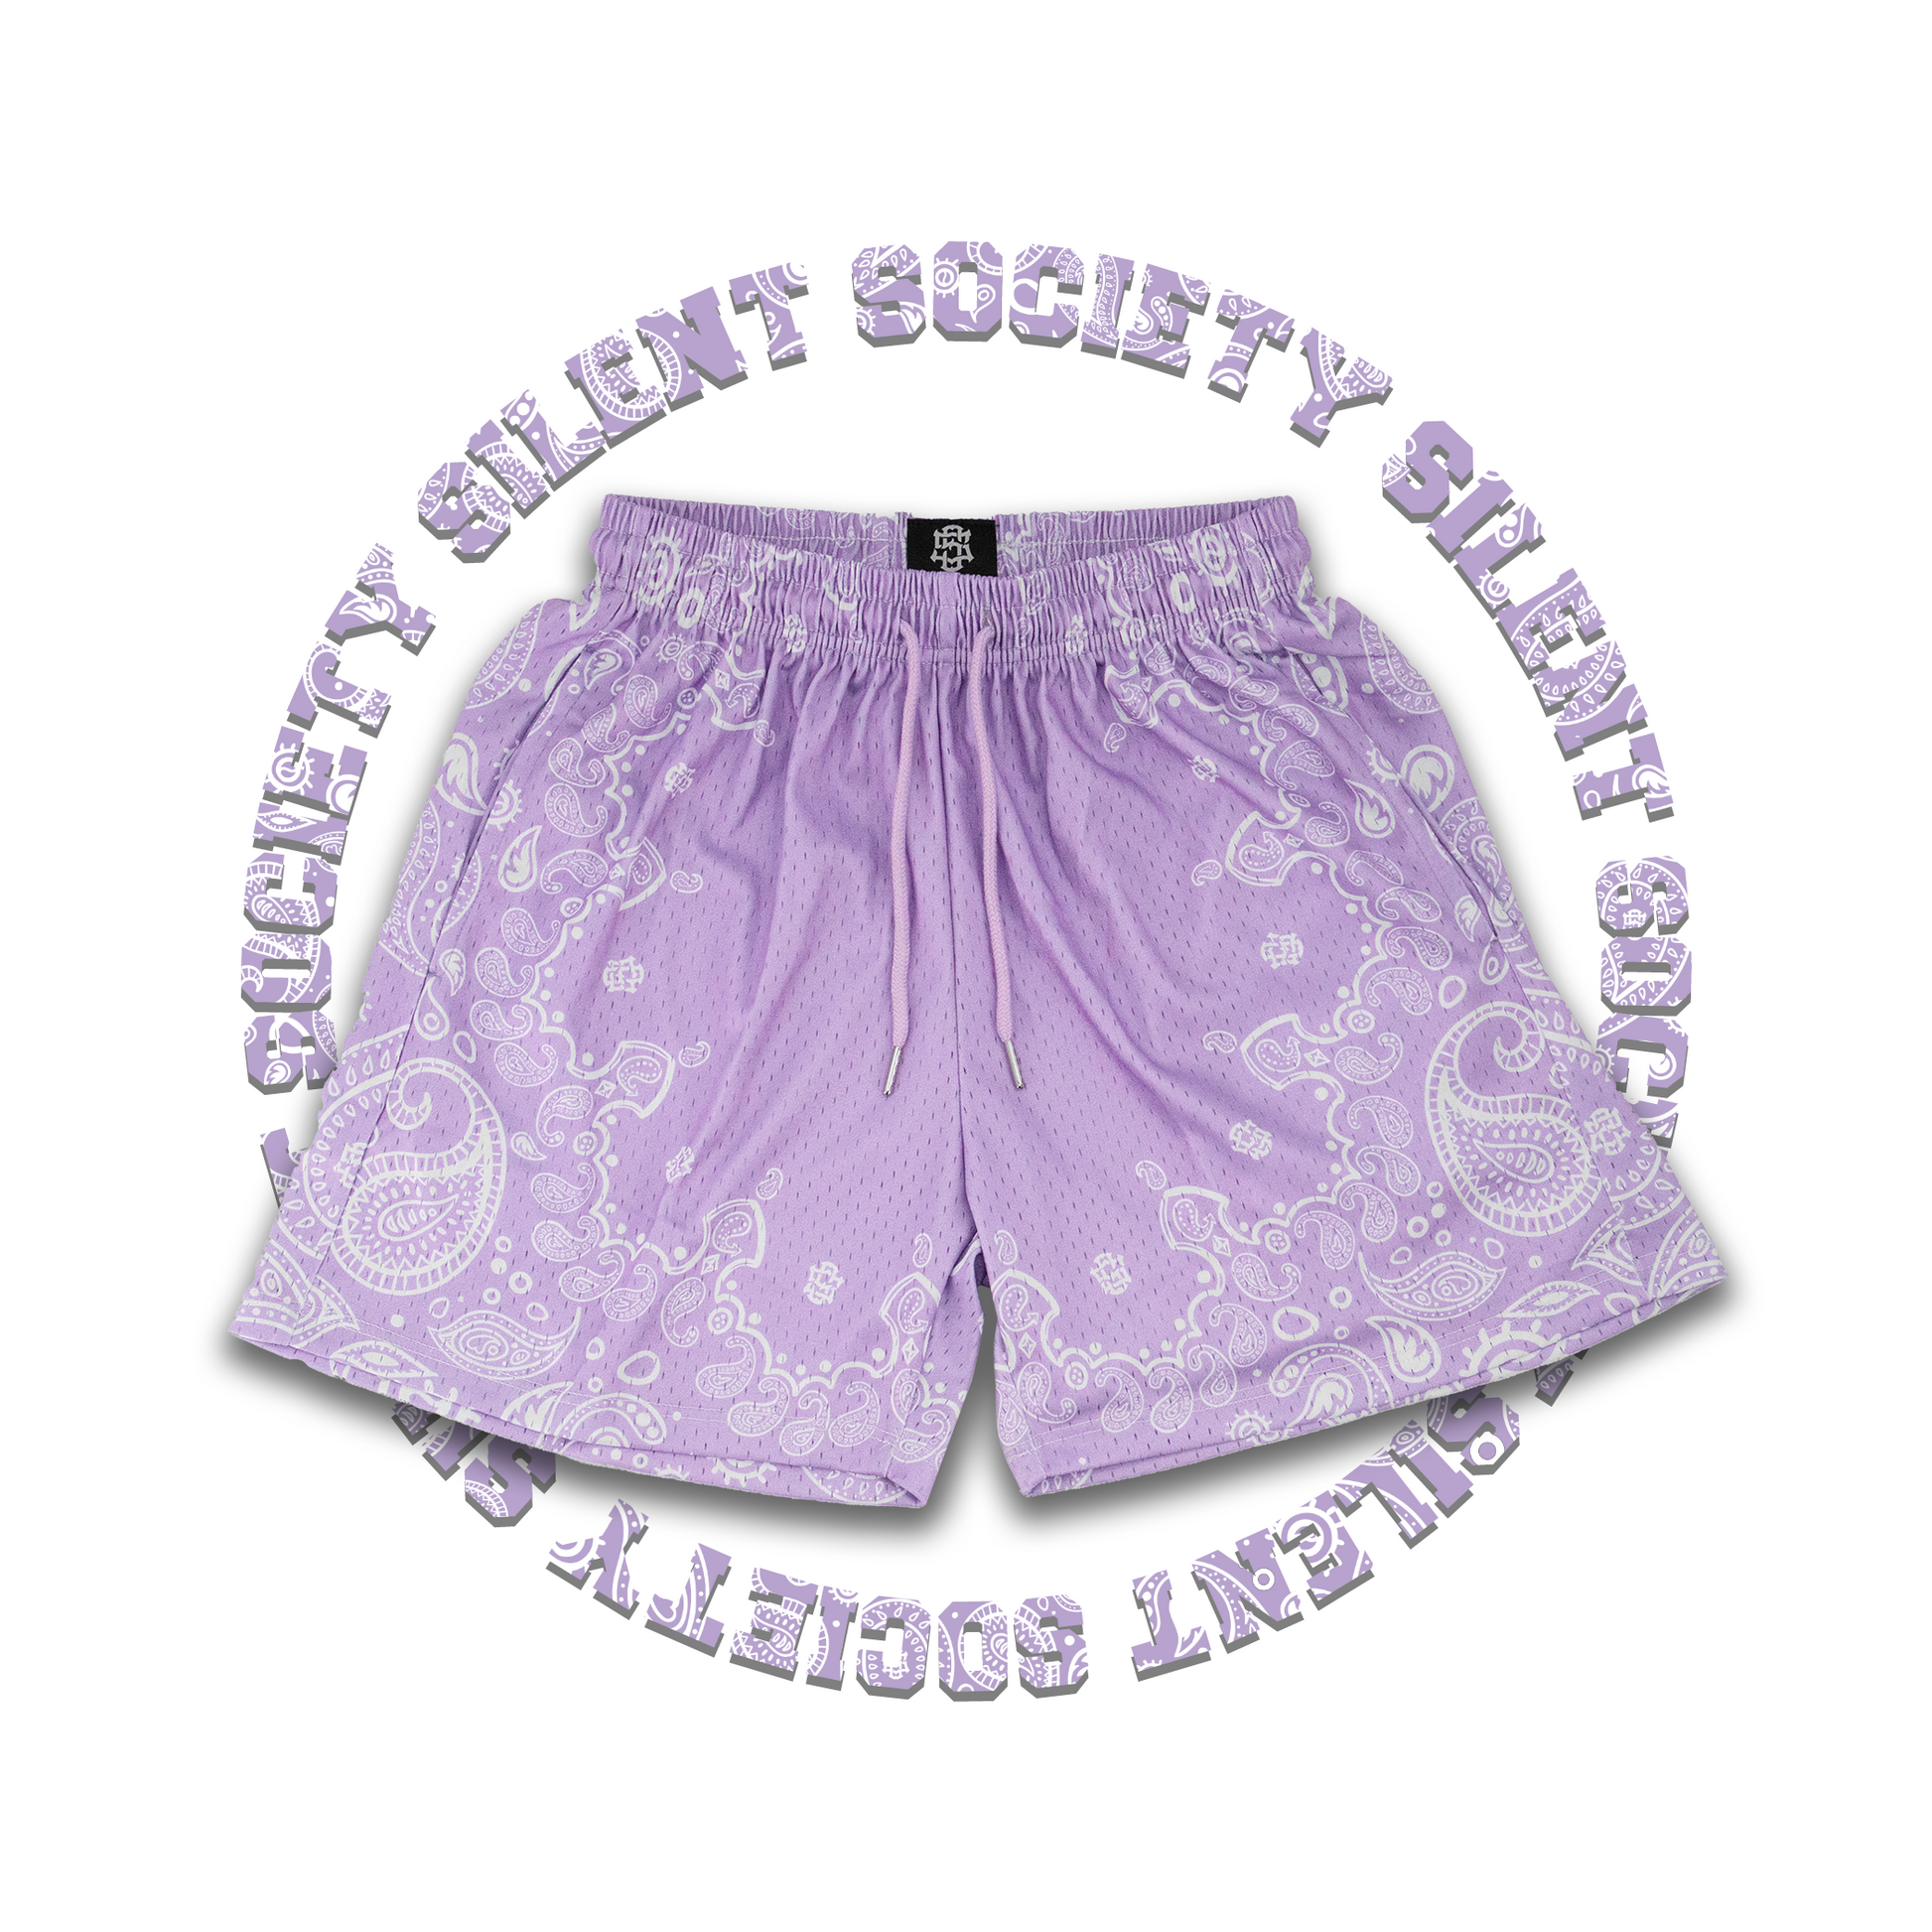 Unisex Paisley Basketball Shorts Lavender Elastic Waist/ 